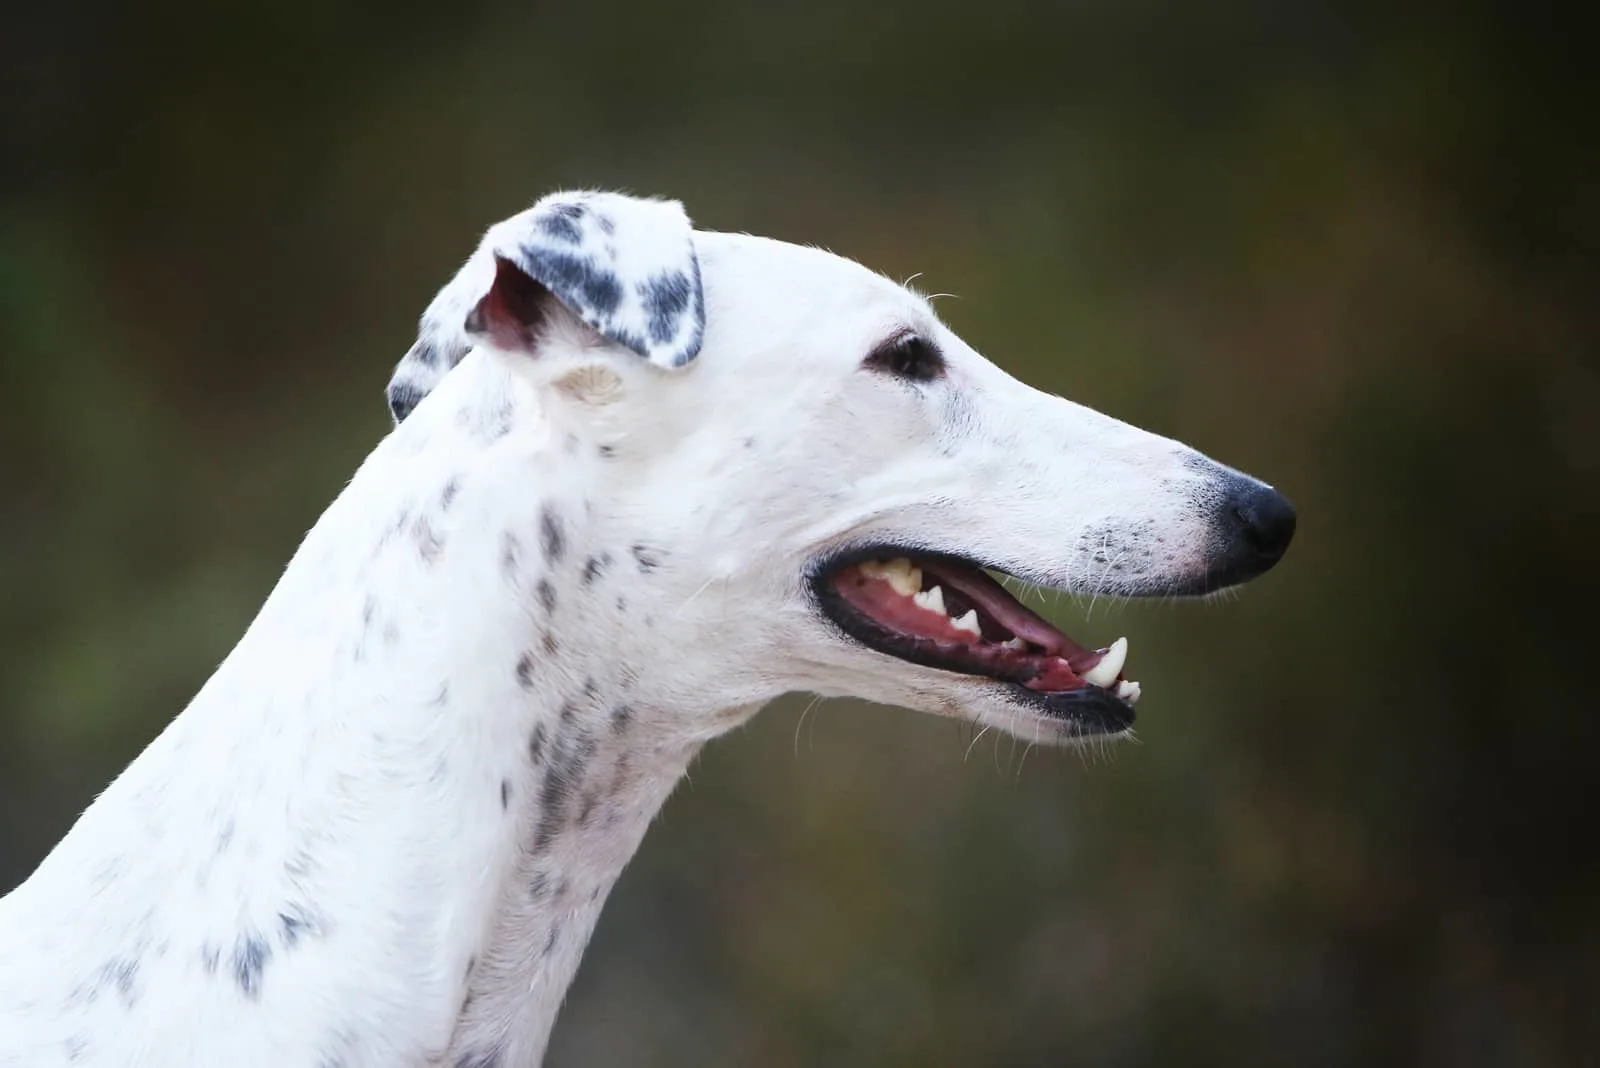 White greyhound dog outdoors